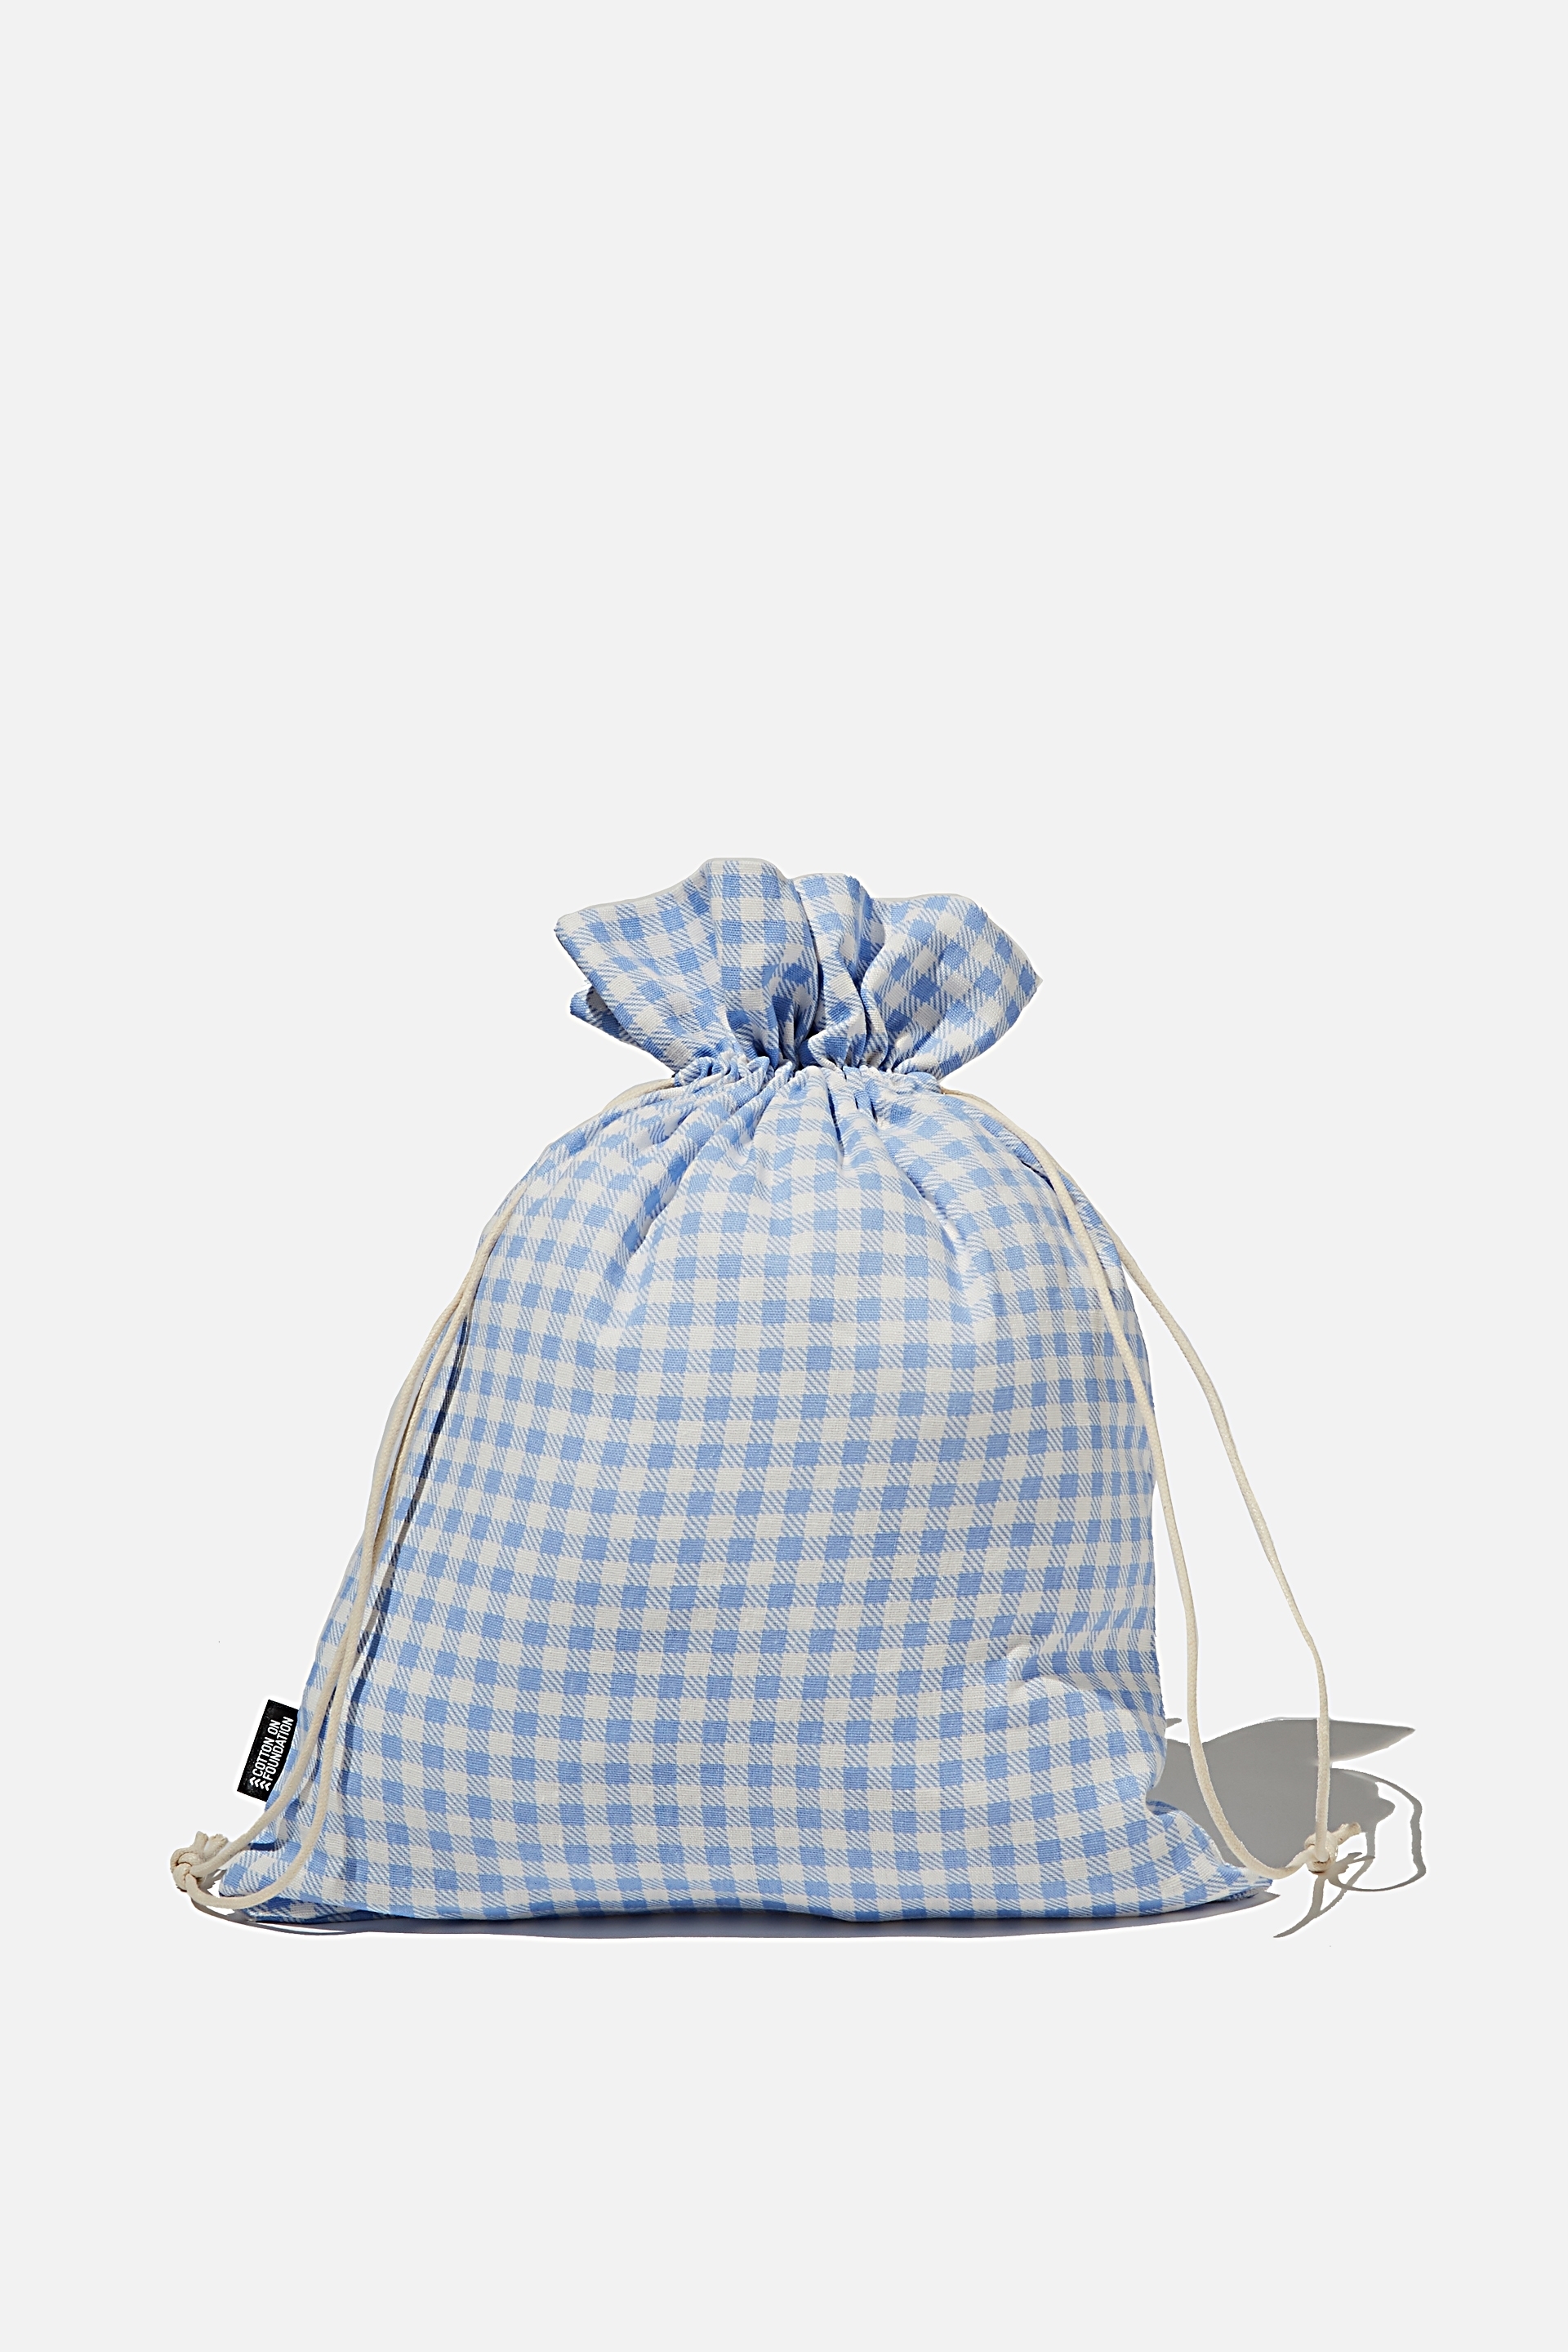 Cotton On Foundation - Foundation Medium Gift Bag - Blue Gingham